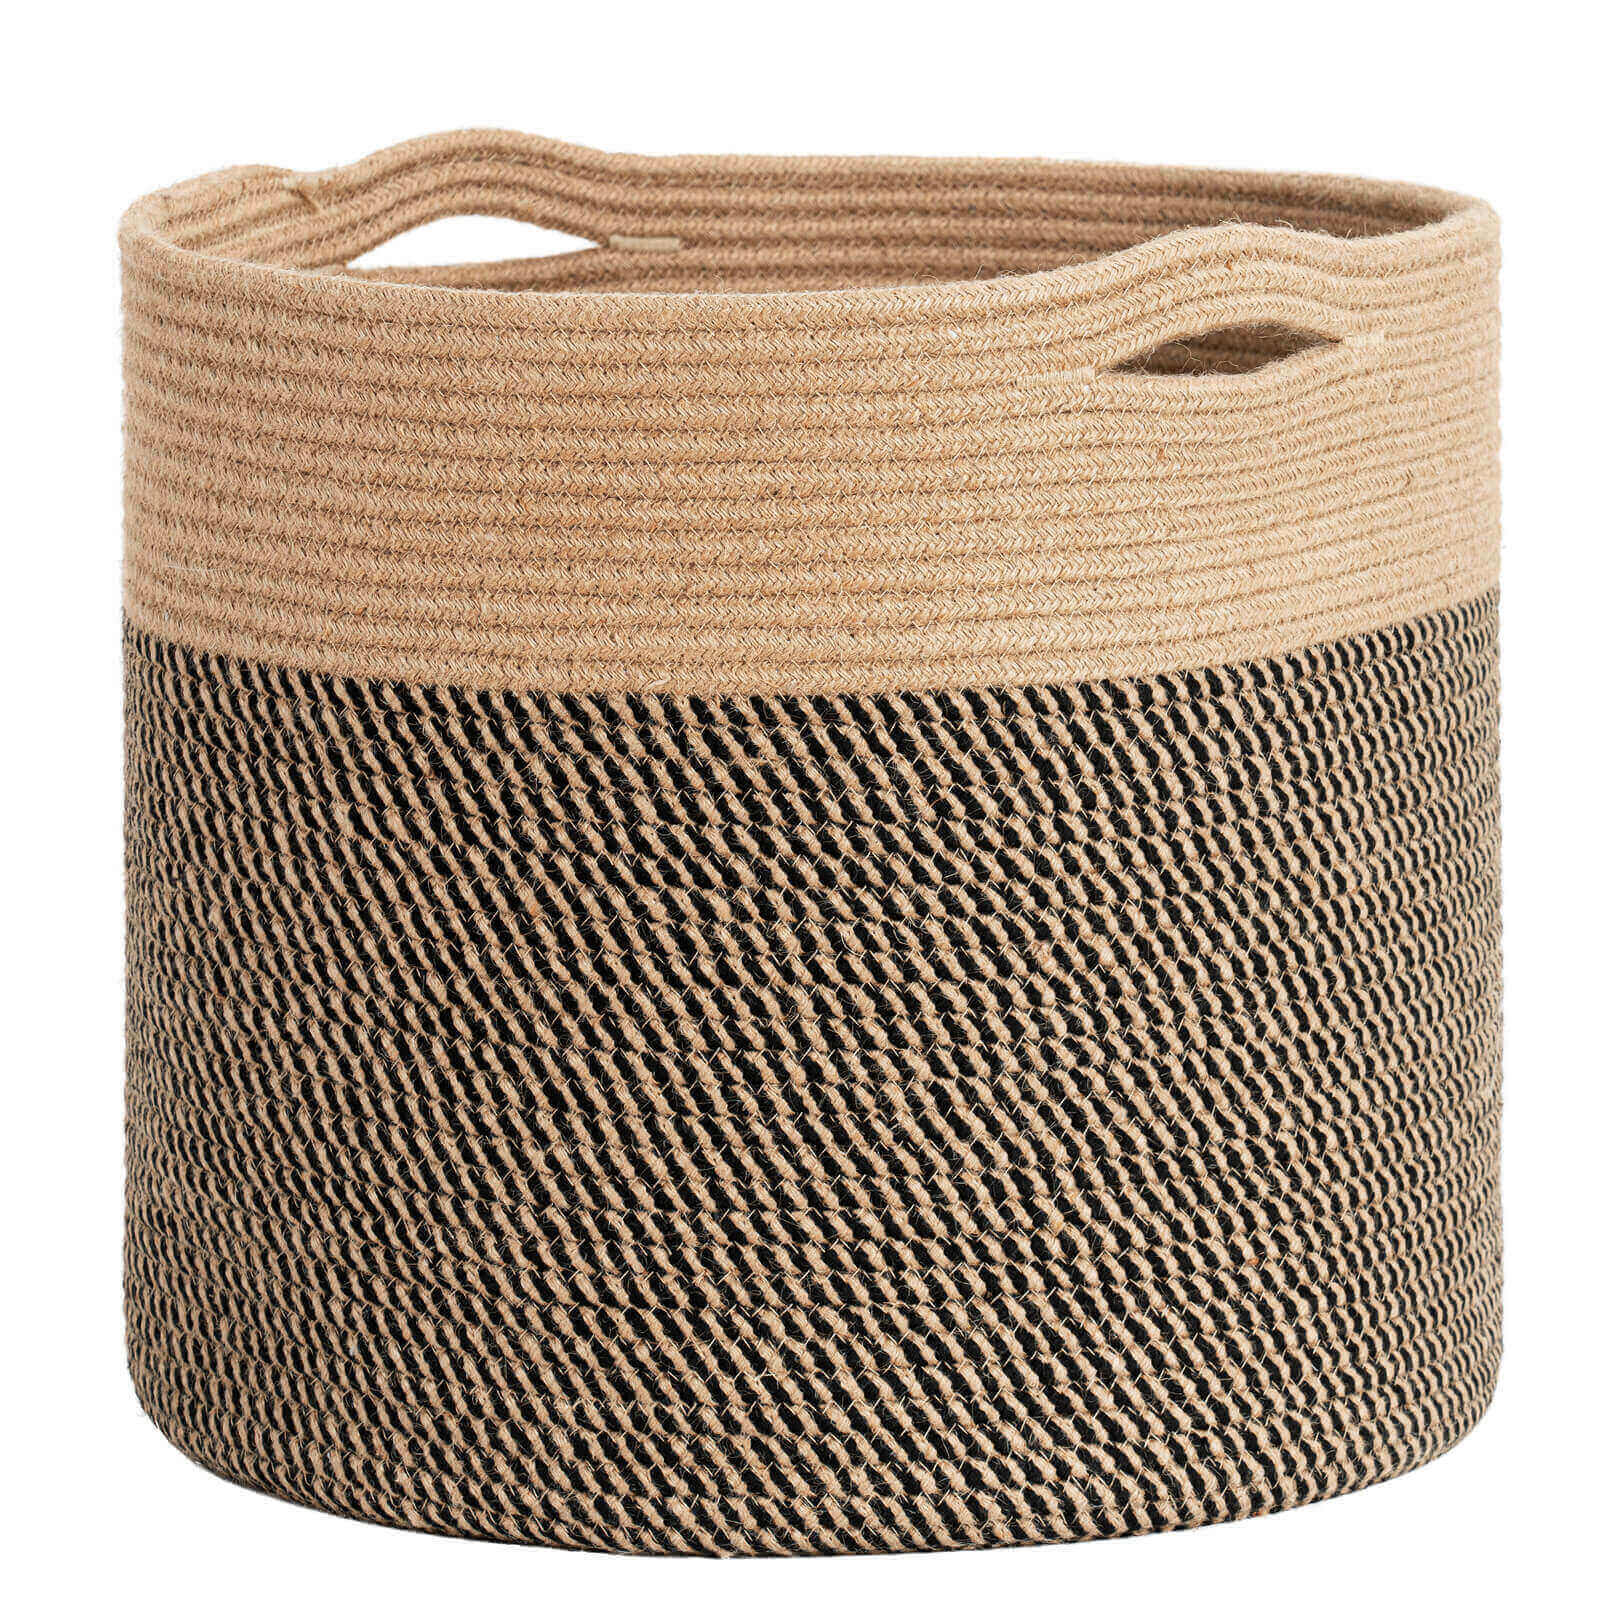 Goodpick Black & Jute Woven Rope Storage Basket